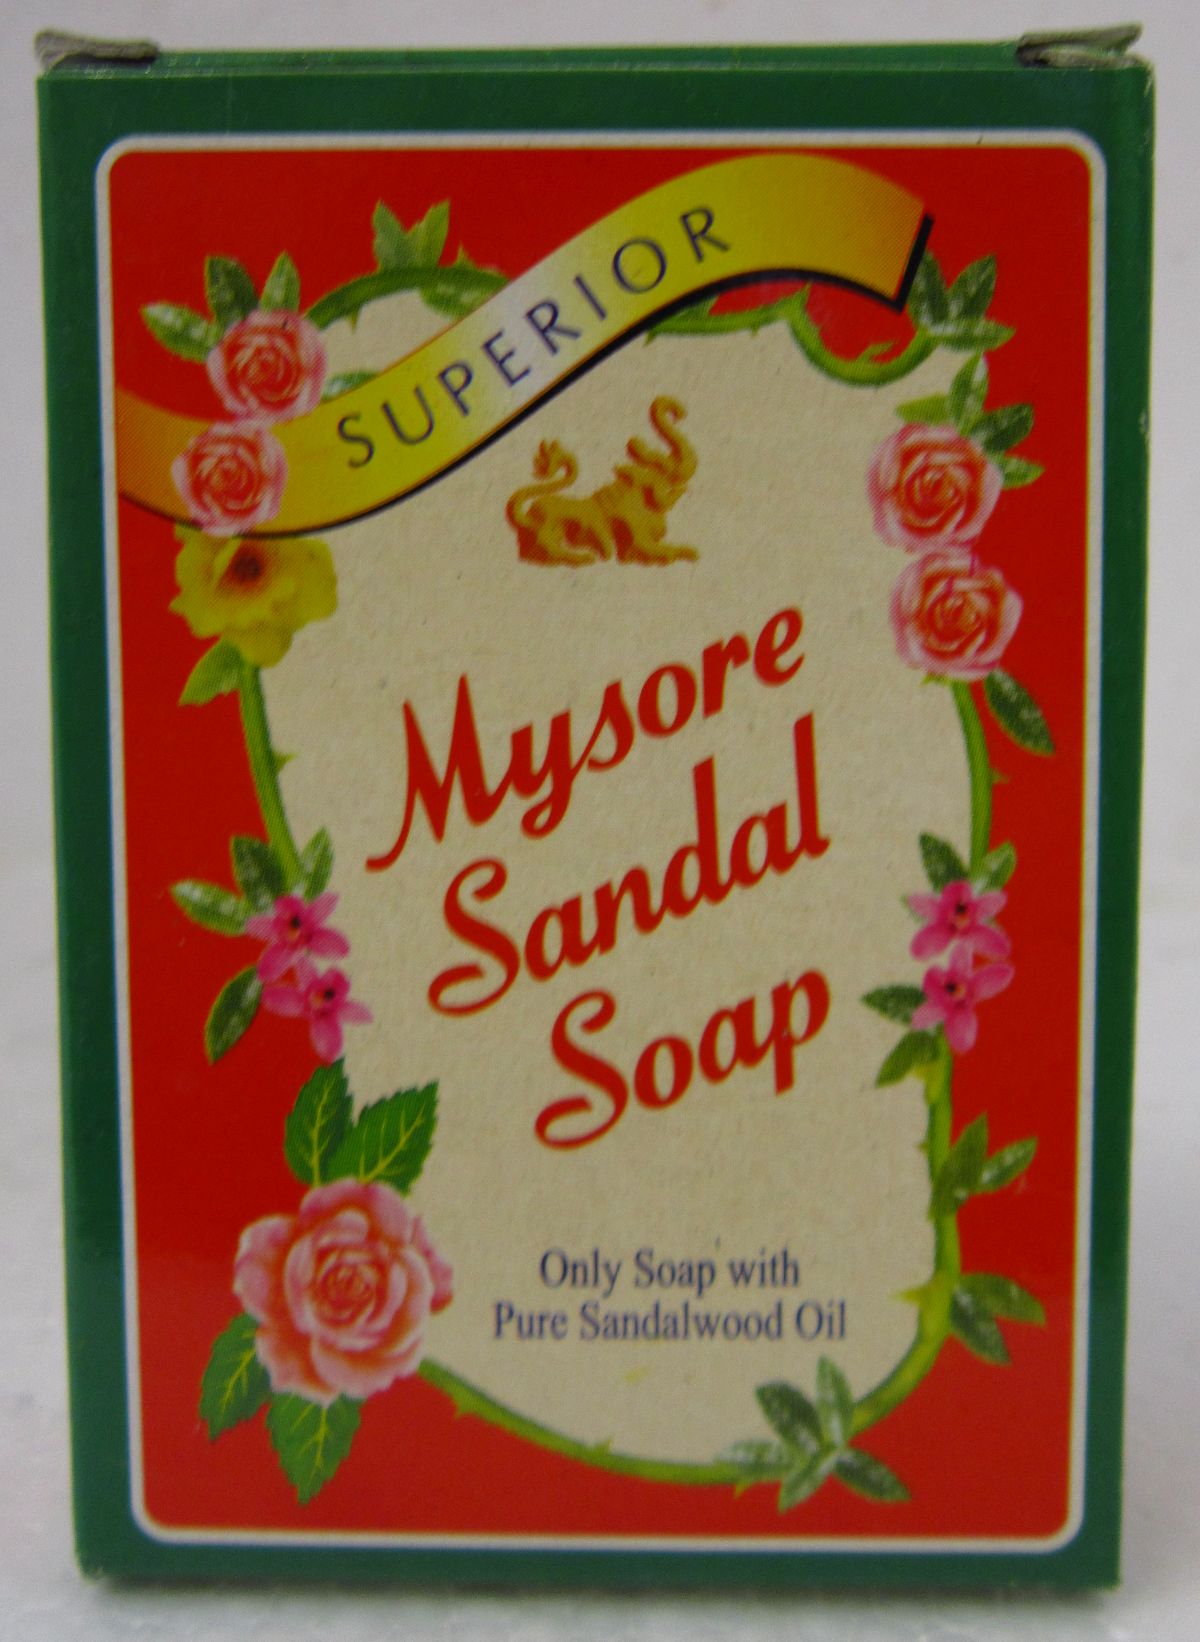 Mysore Sandal Soap  Image